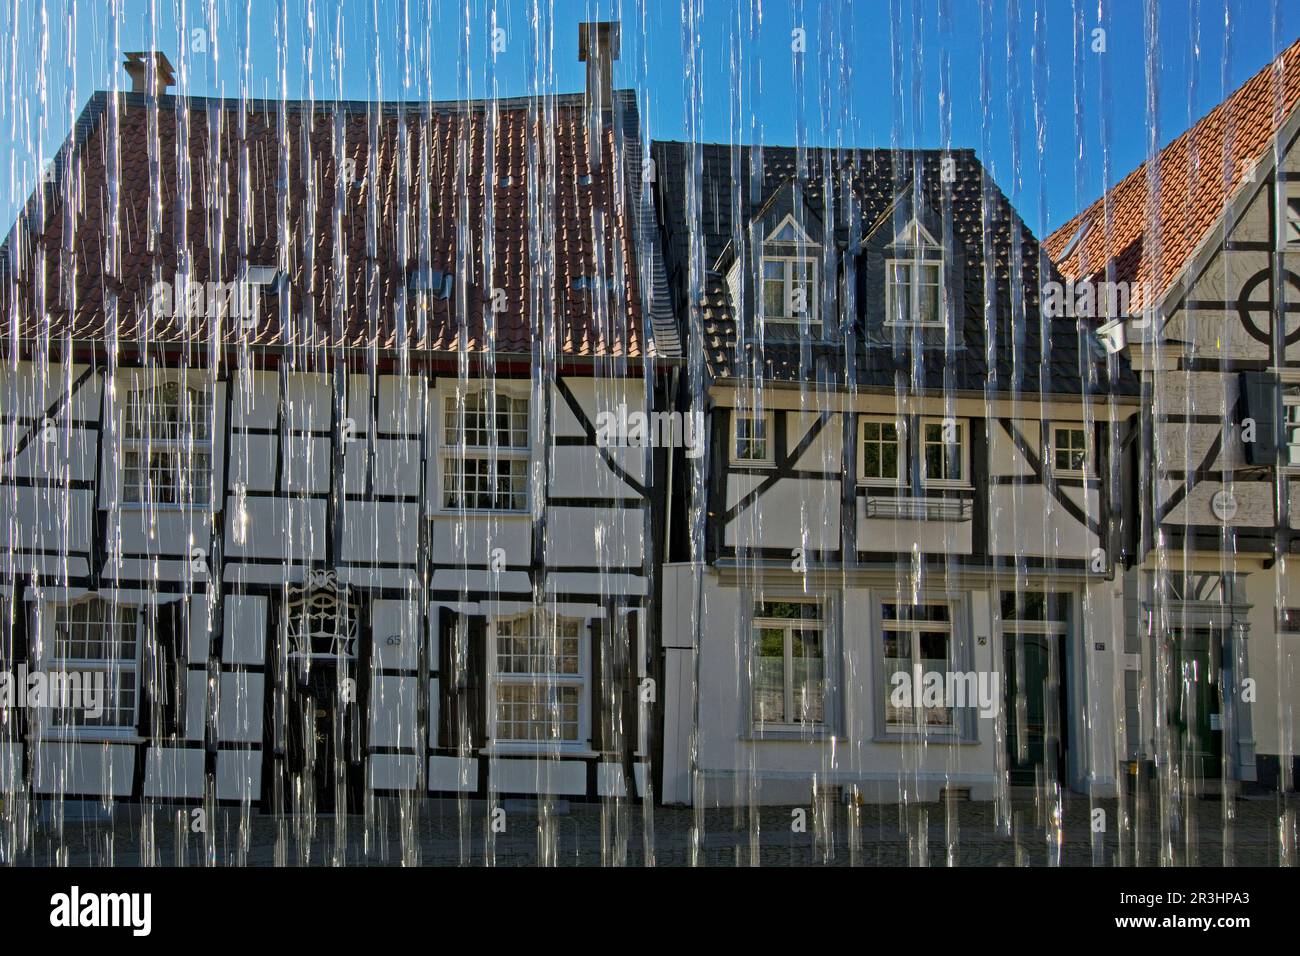 Half-timbered houses behind water from the Weberbrunnen on Tuchmacherplatz, Kettwig, Essen, Germany Stock Photo